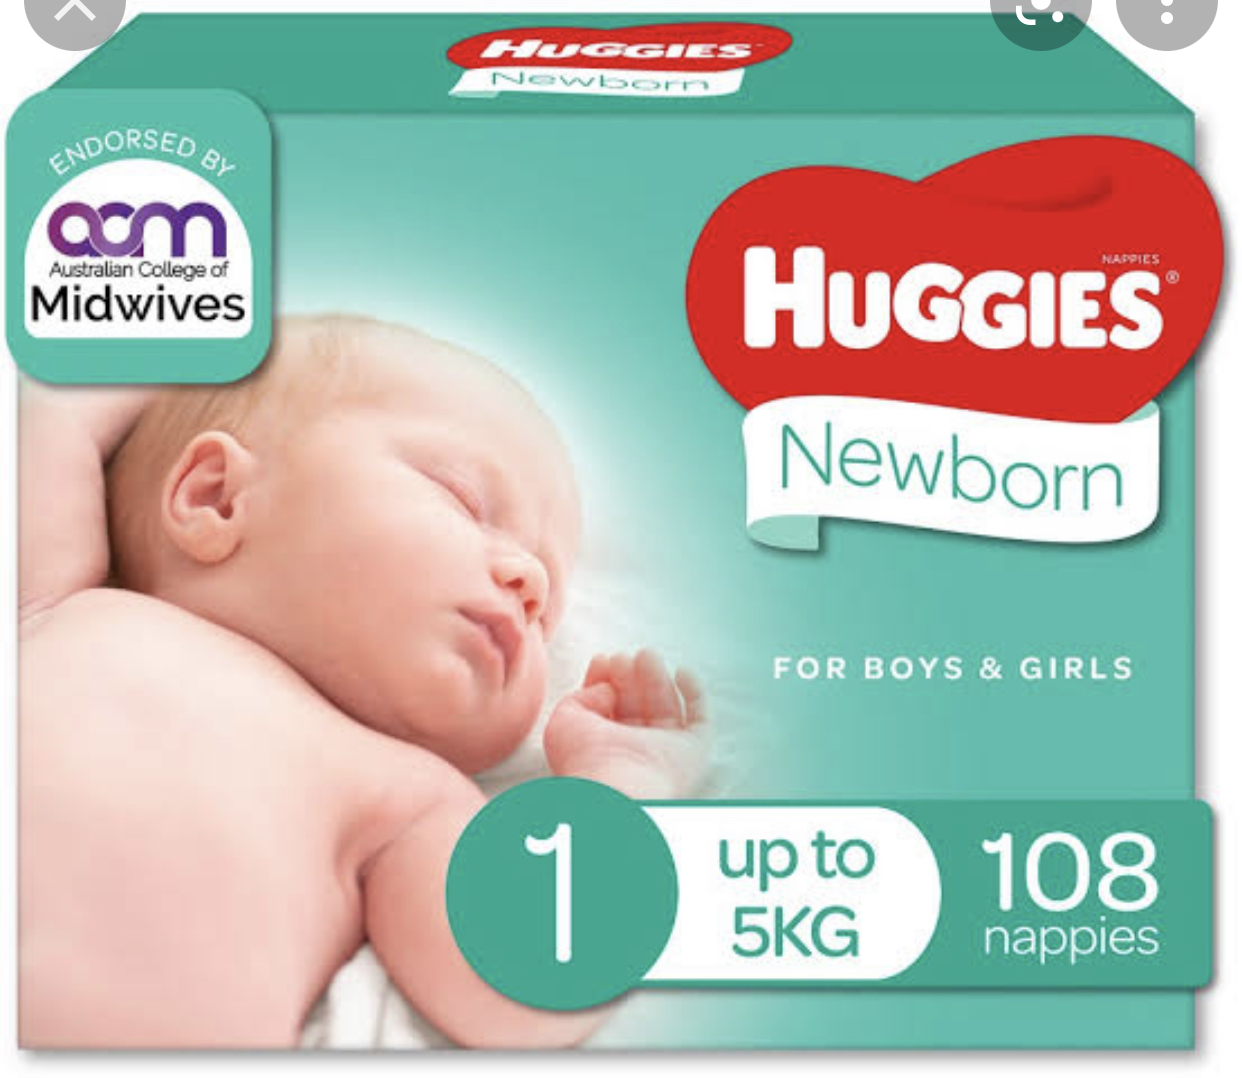 Newborn nappies